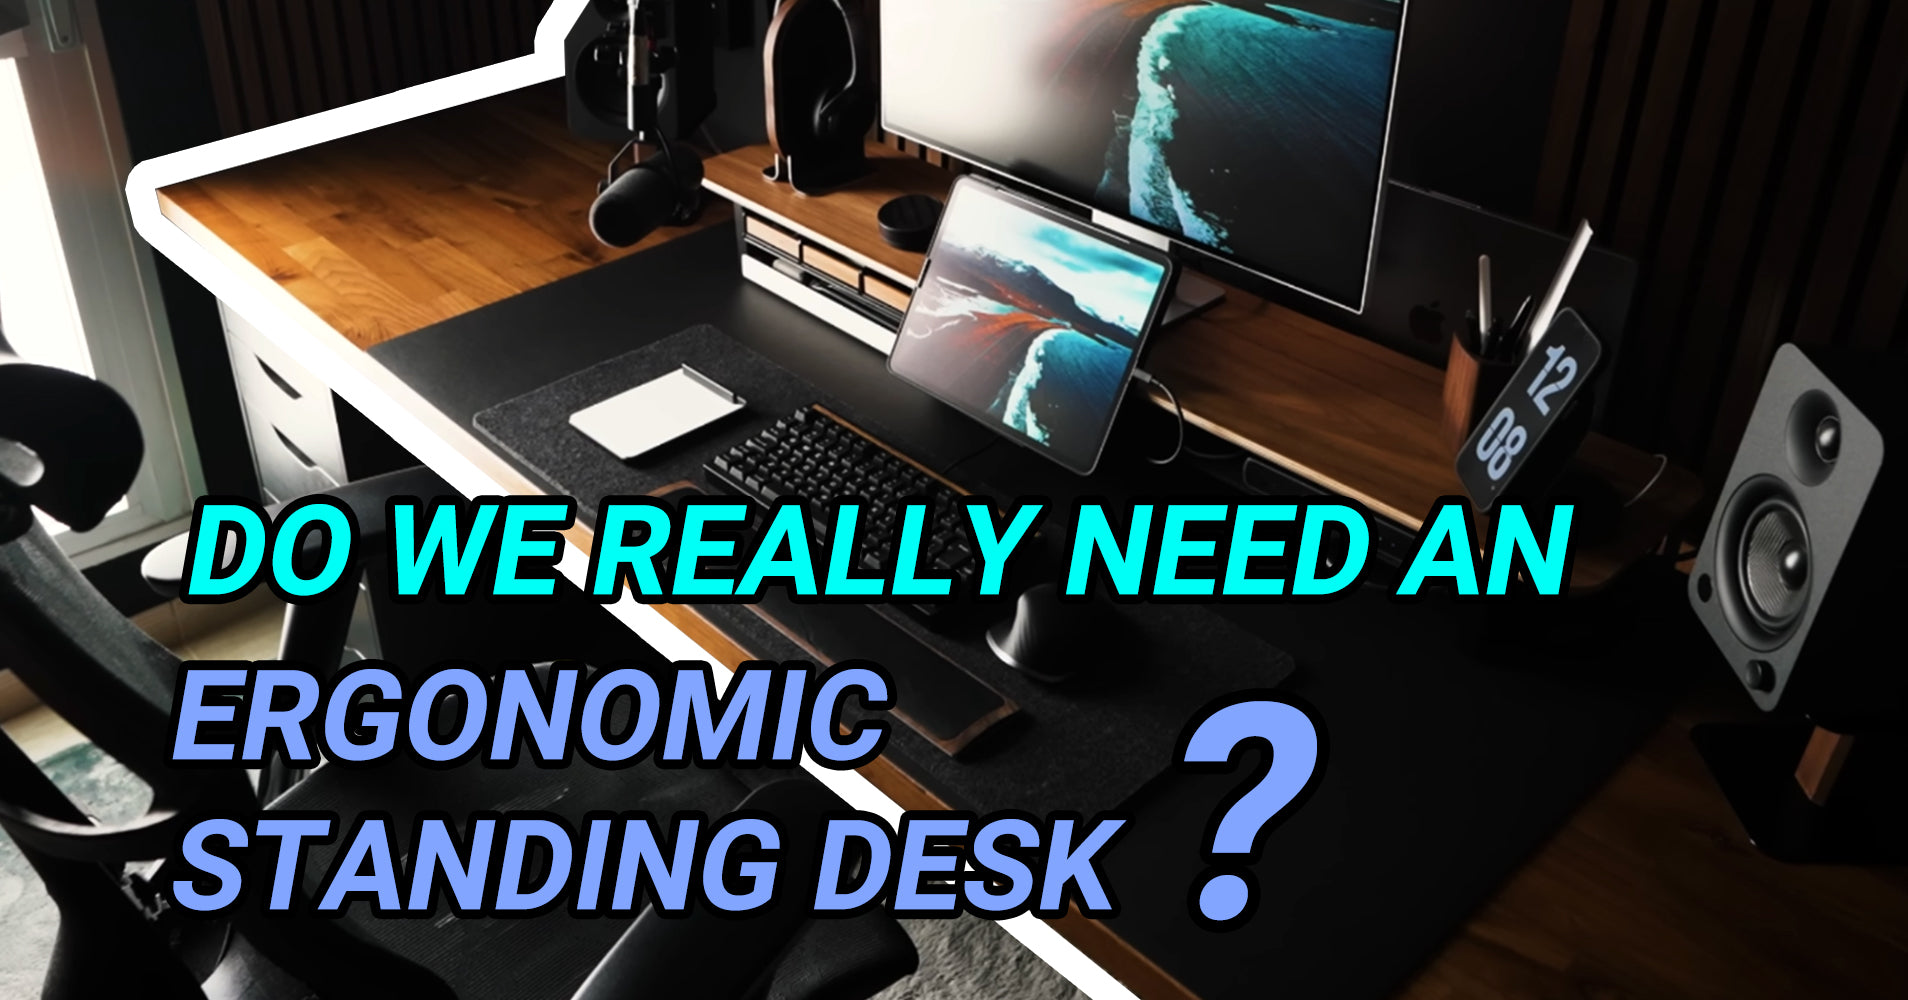 Do We Really Need an Ergonomic Standing Desk?